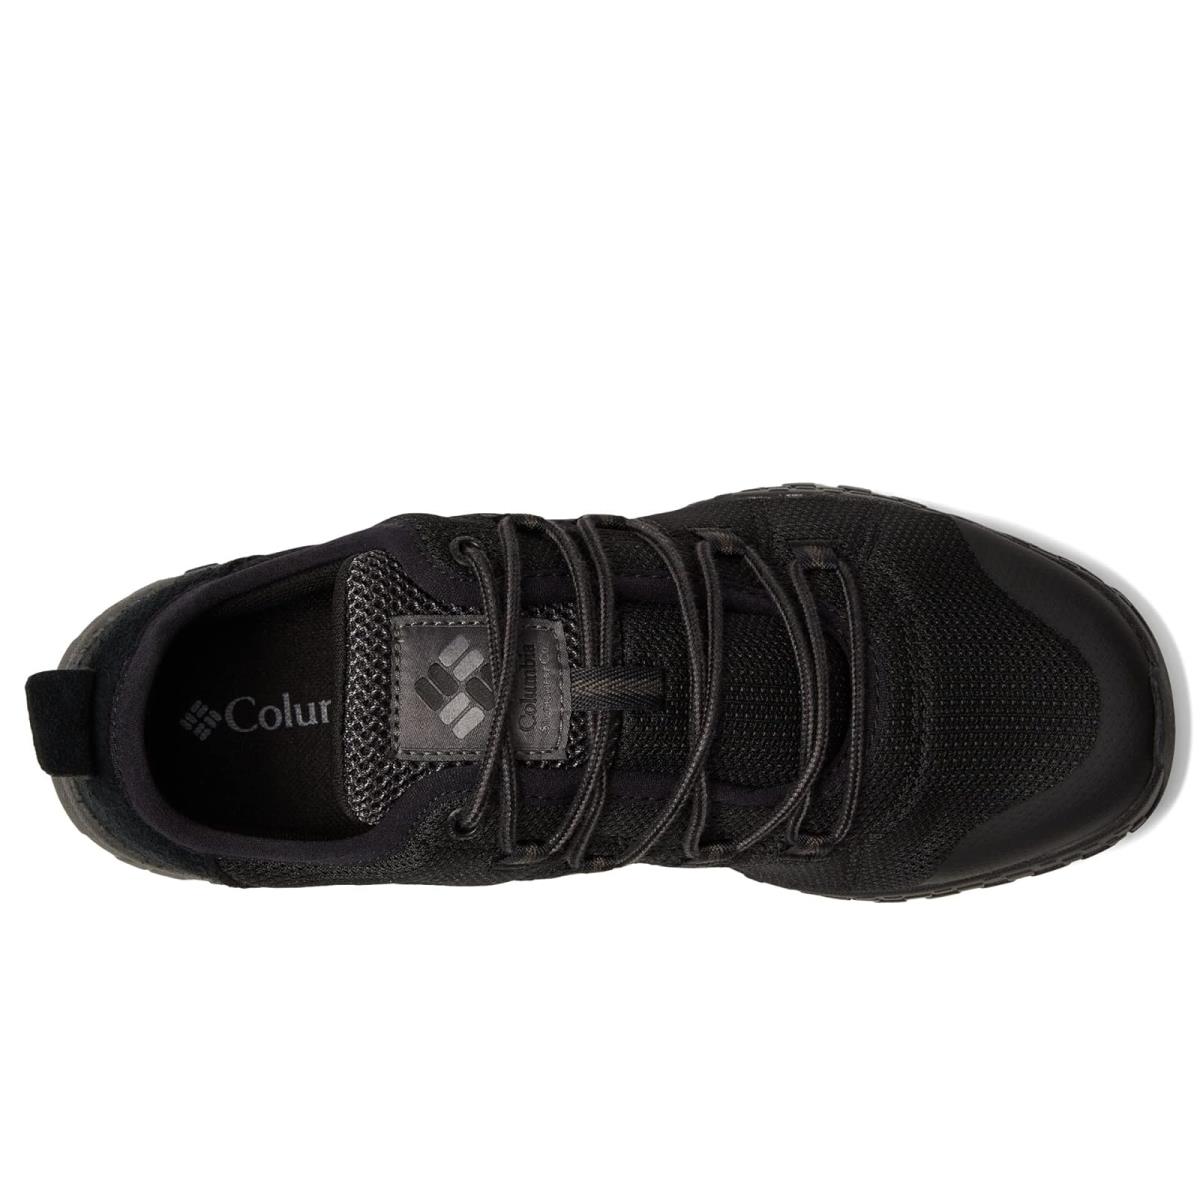 Columbia shoes  - Black/Dark Grey 0